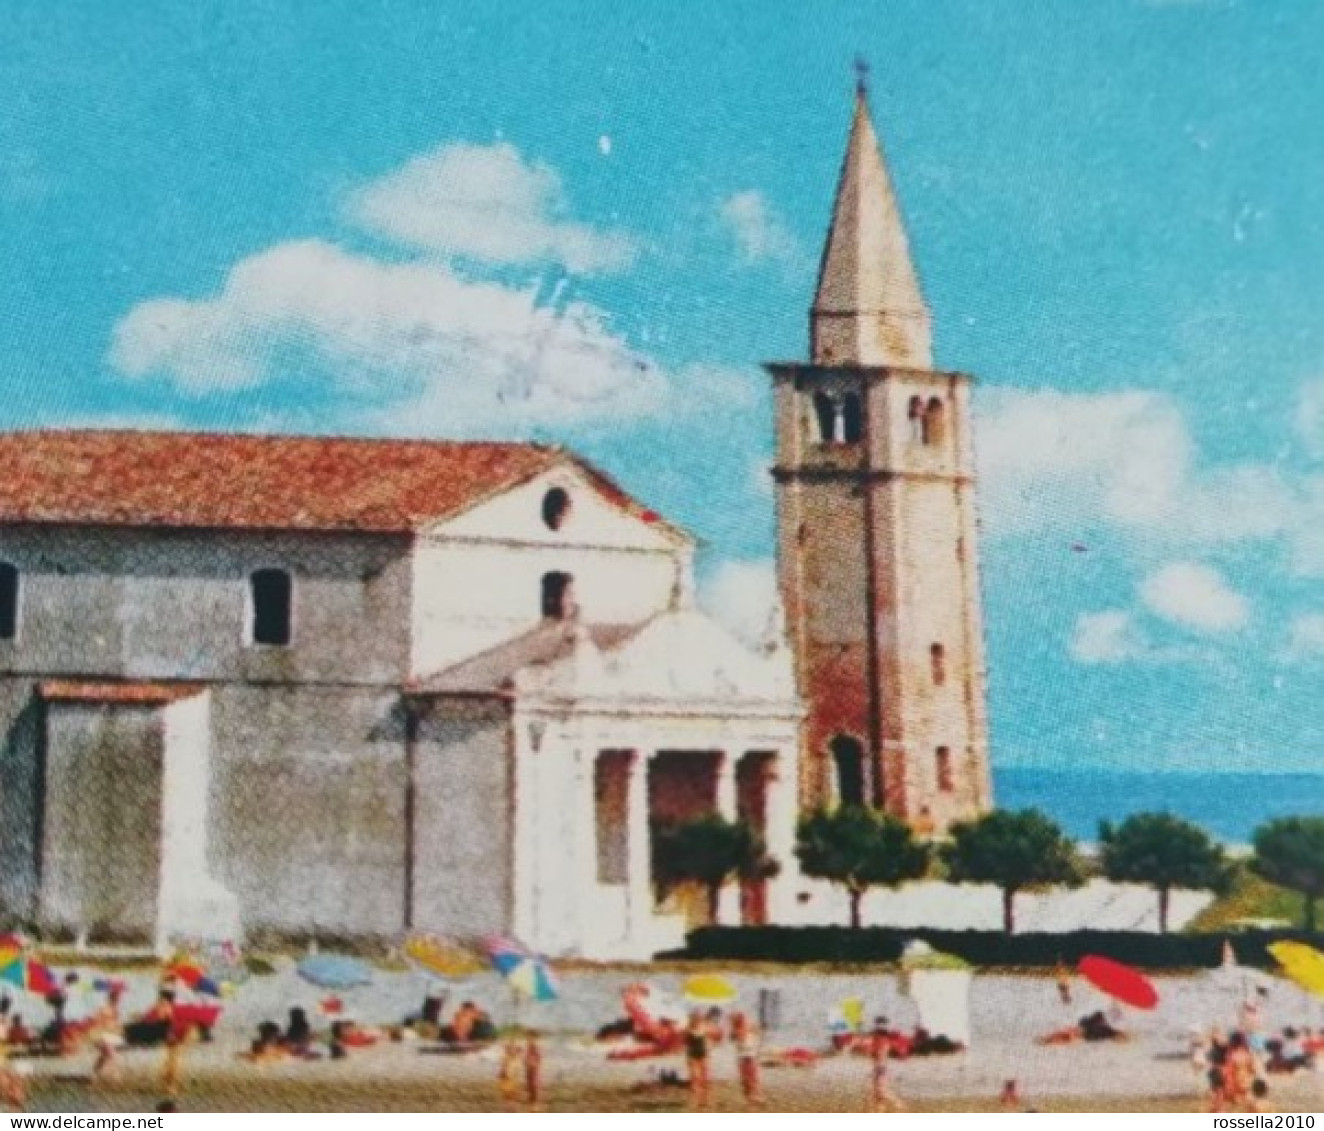 CARTOLINA ITALIA VENEZIA CAORLE SPIAGGIA LEVANTE Italy Postcard ITALIEN AK - Venezia (Venice)